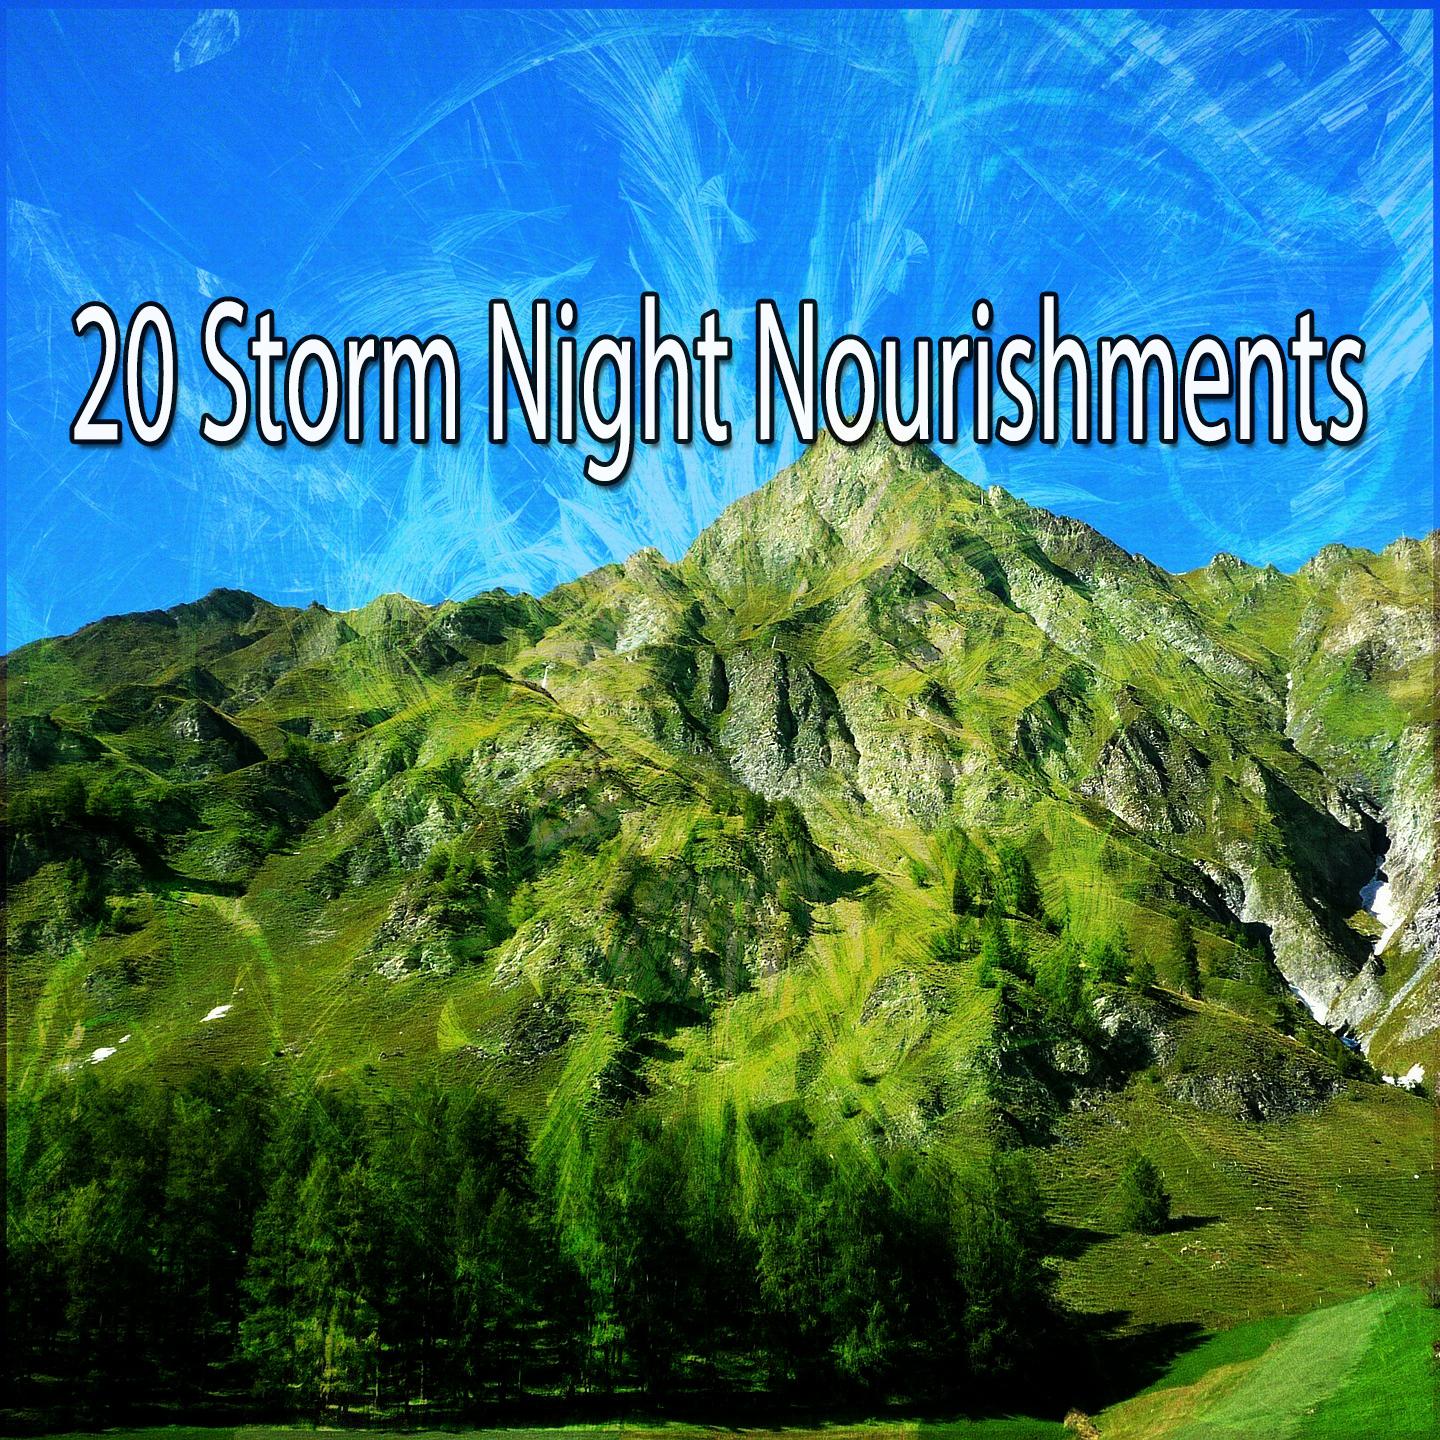 20 Storm Night Nourishments